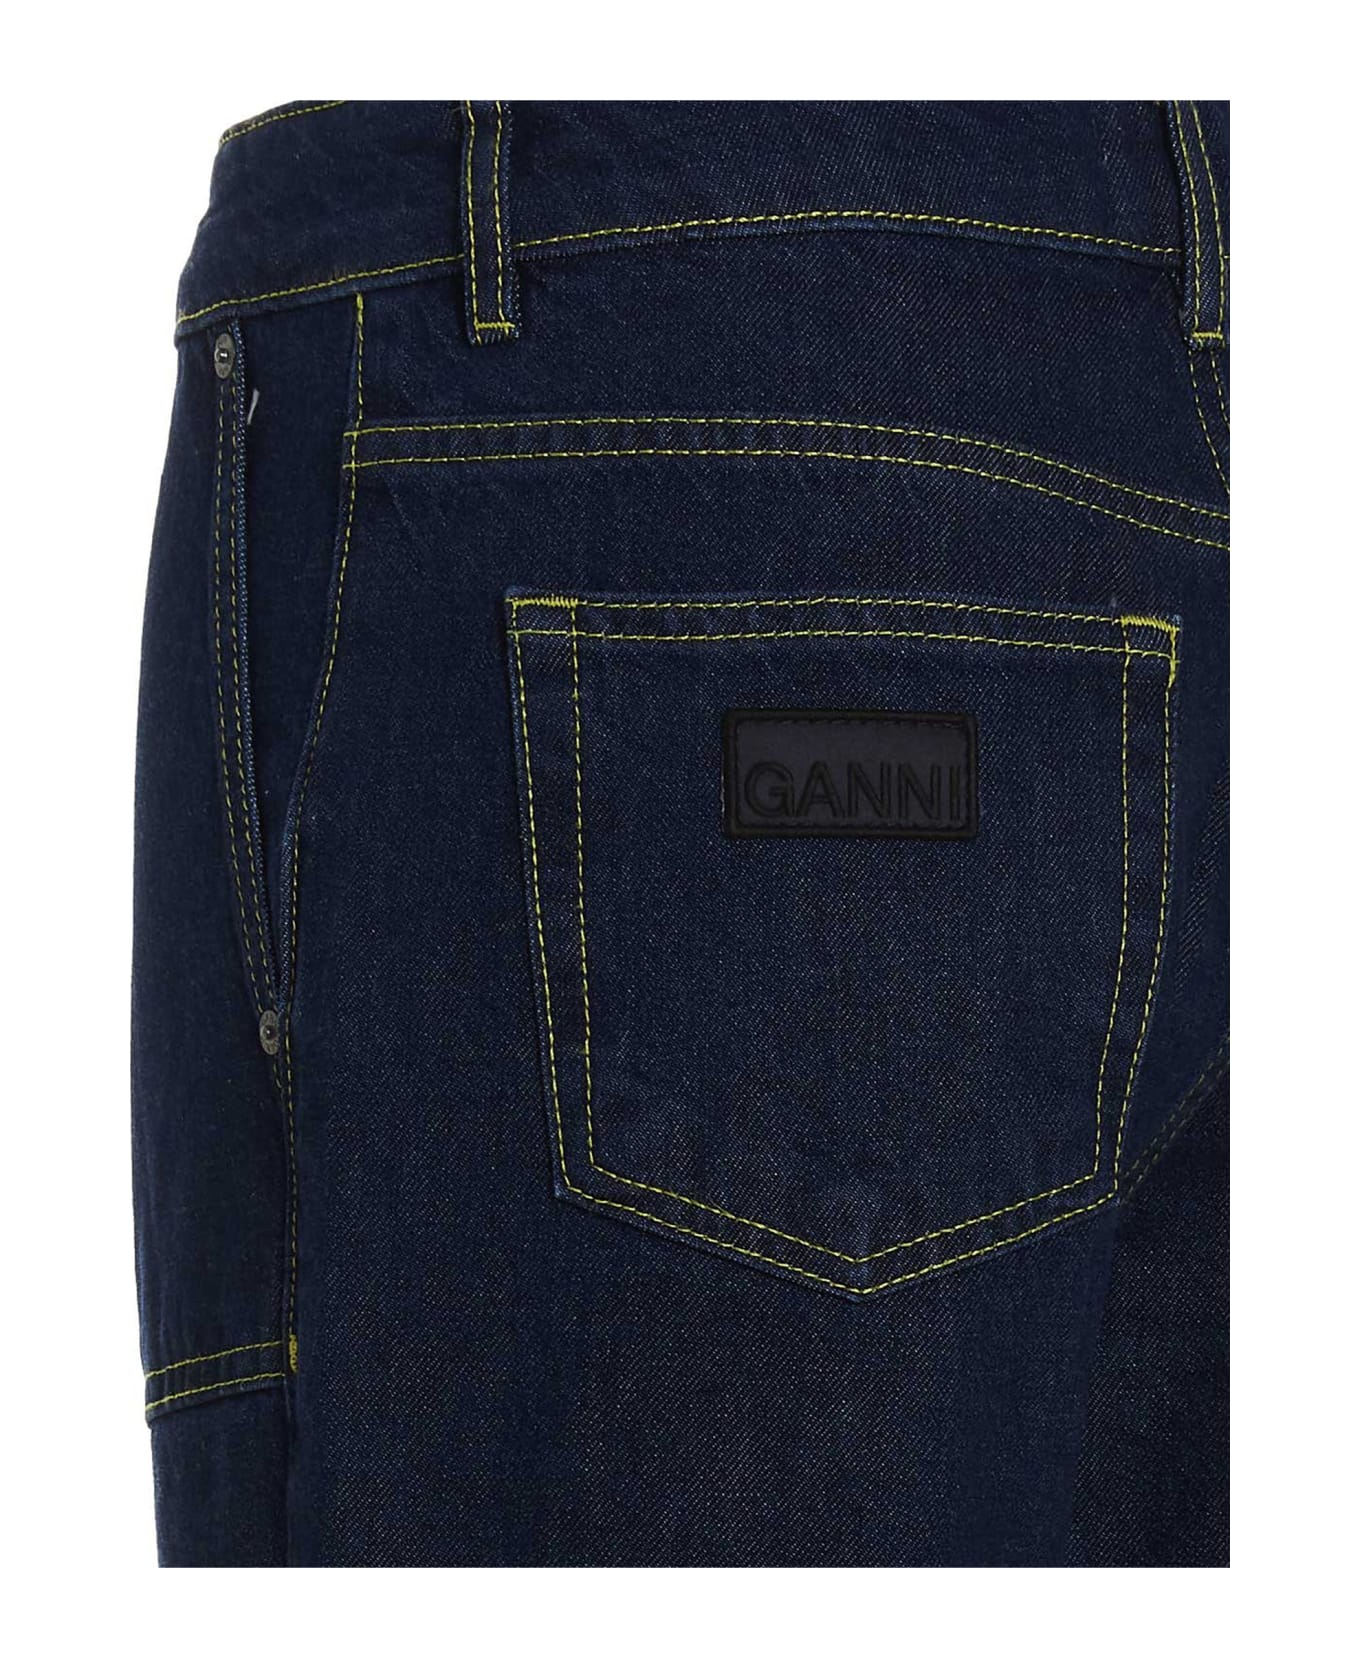 Ganni Cargo Jeans - Blue